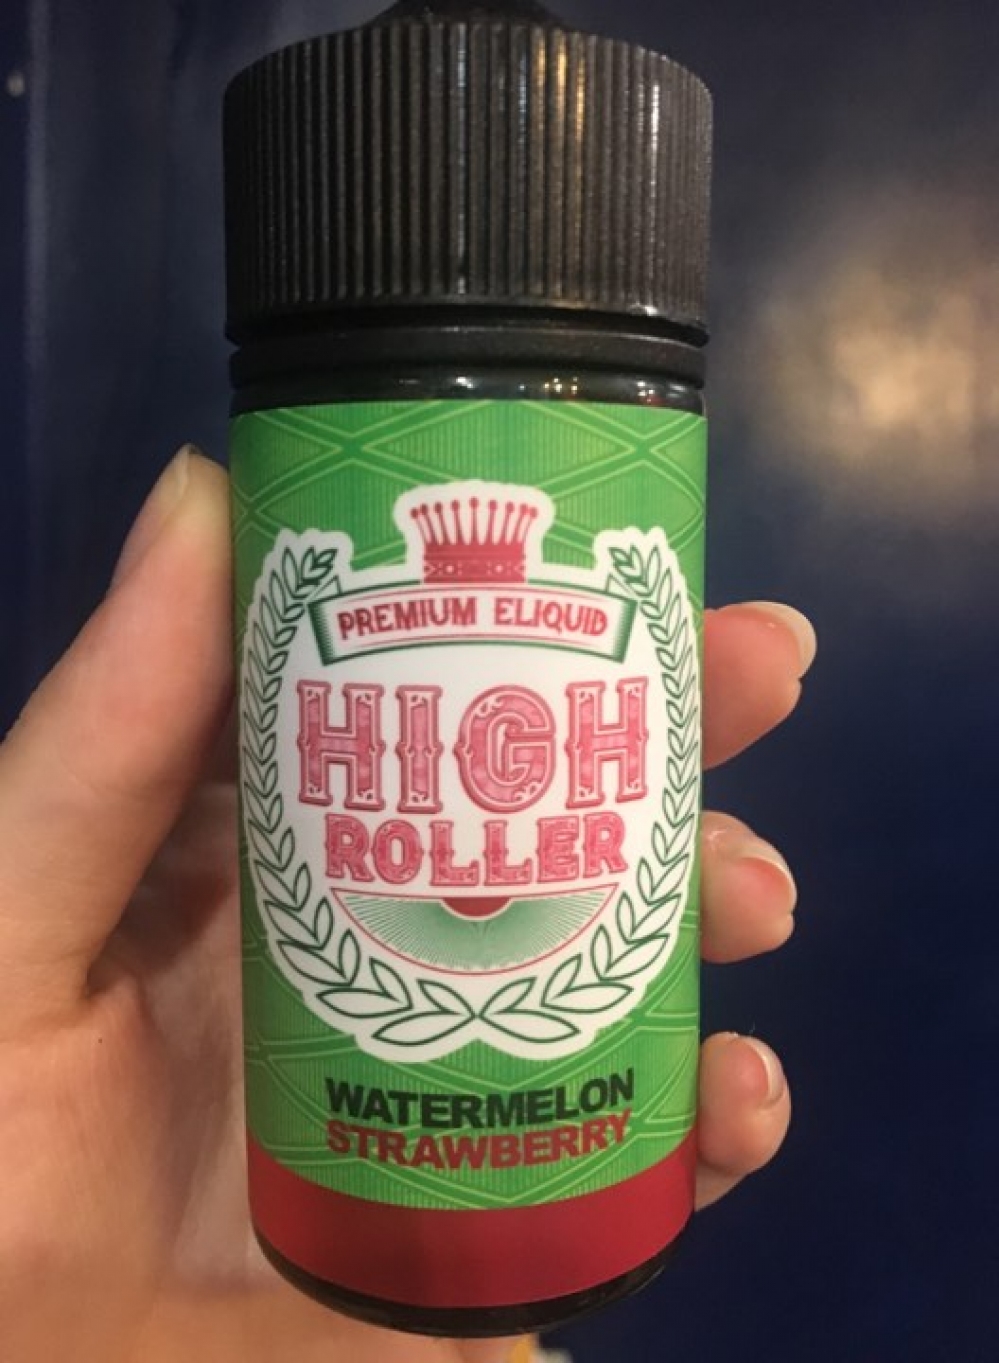 High Roller watermelon strawbery